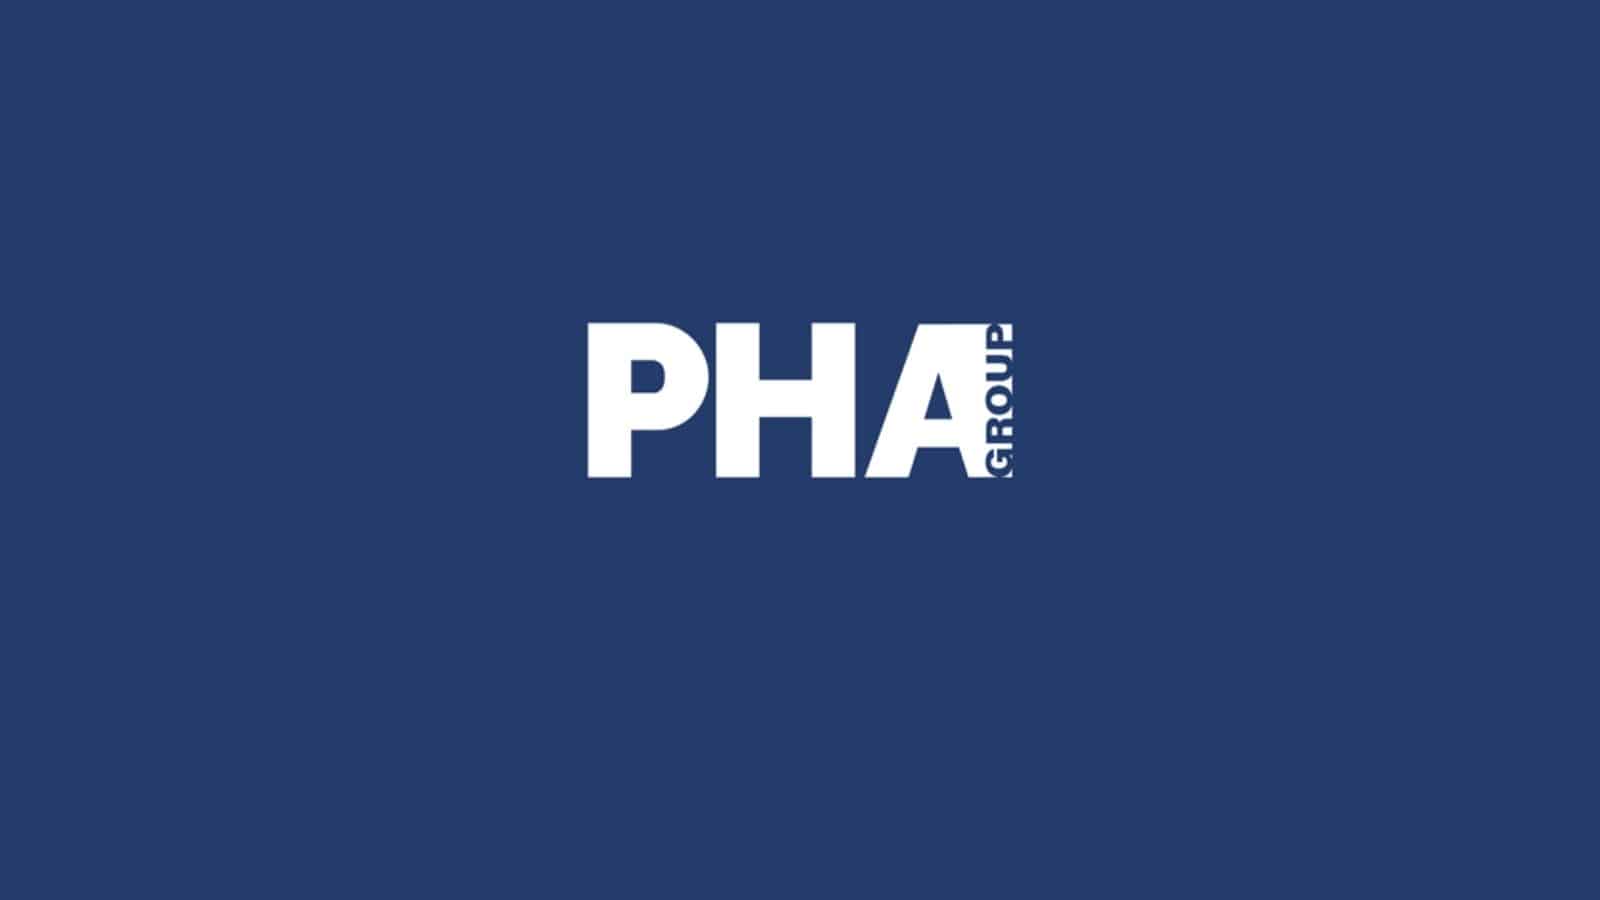 The PHA Group